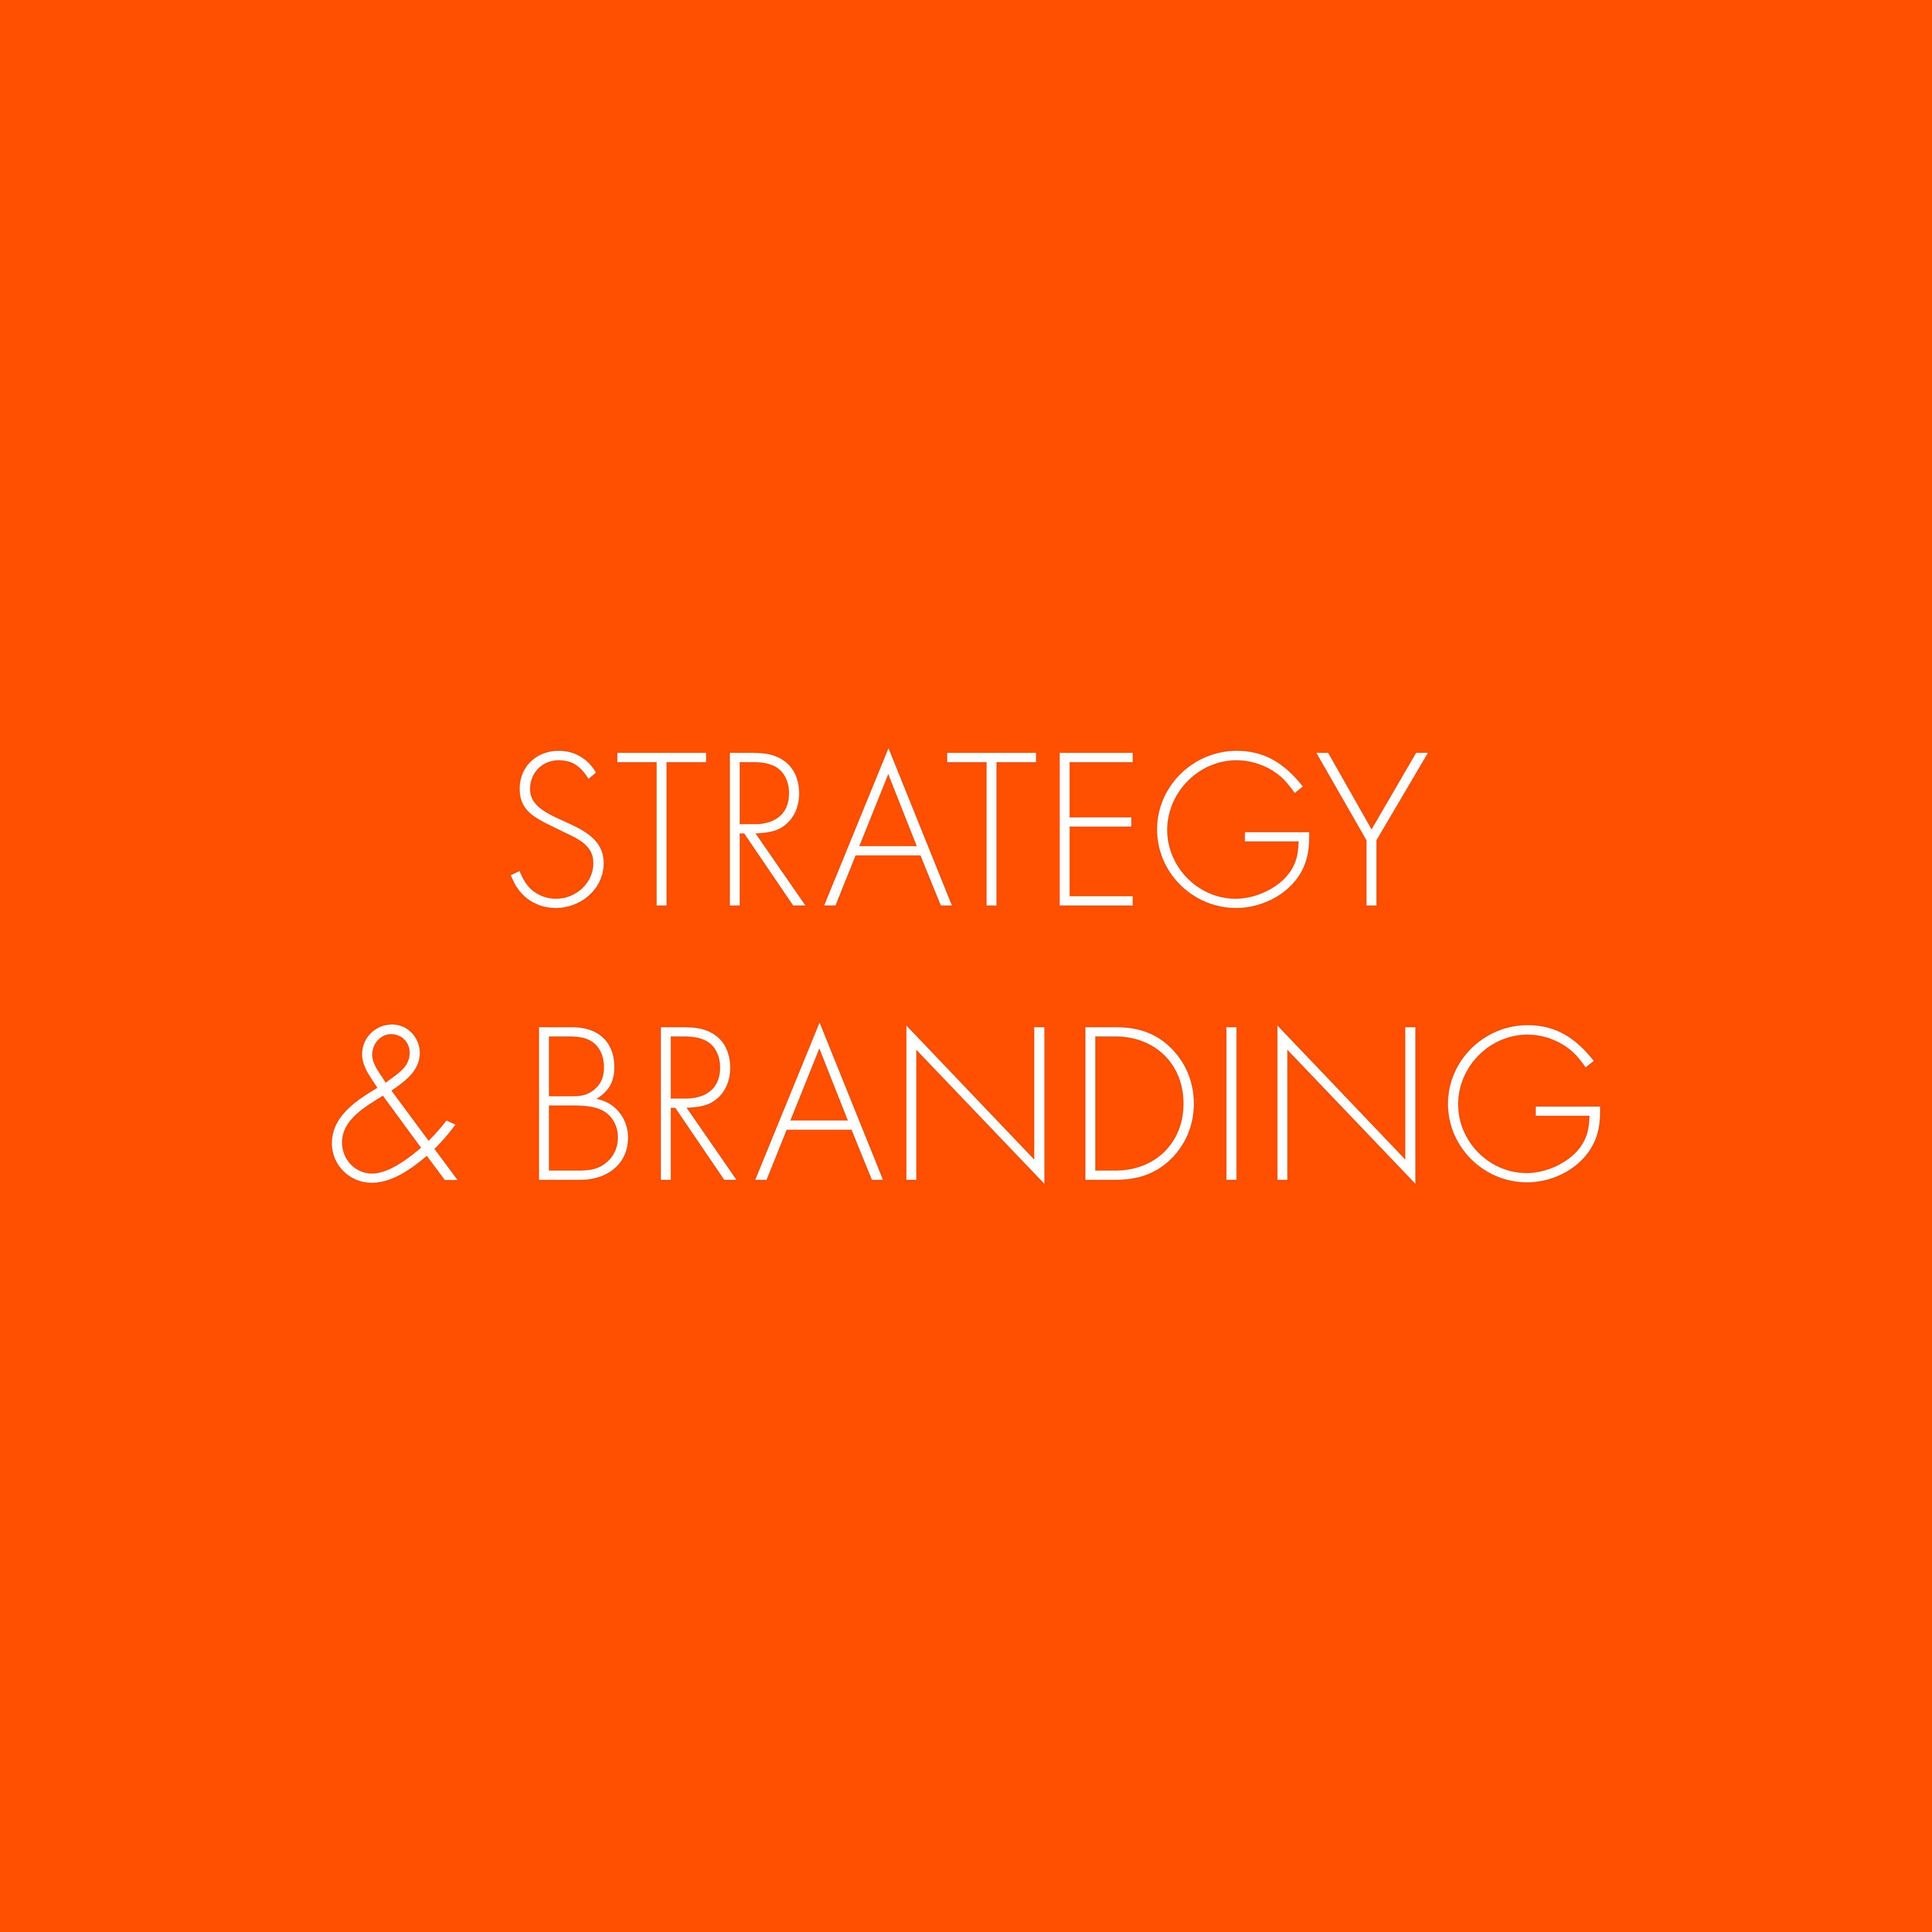 Strategy & Branding